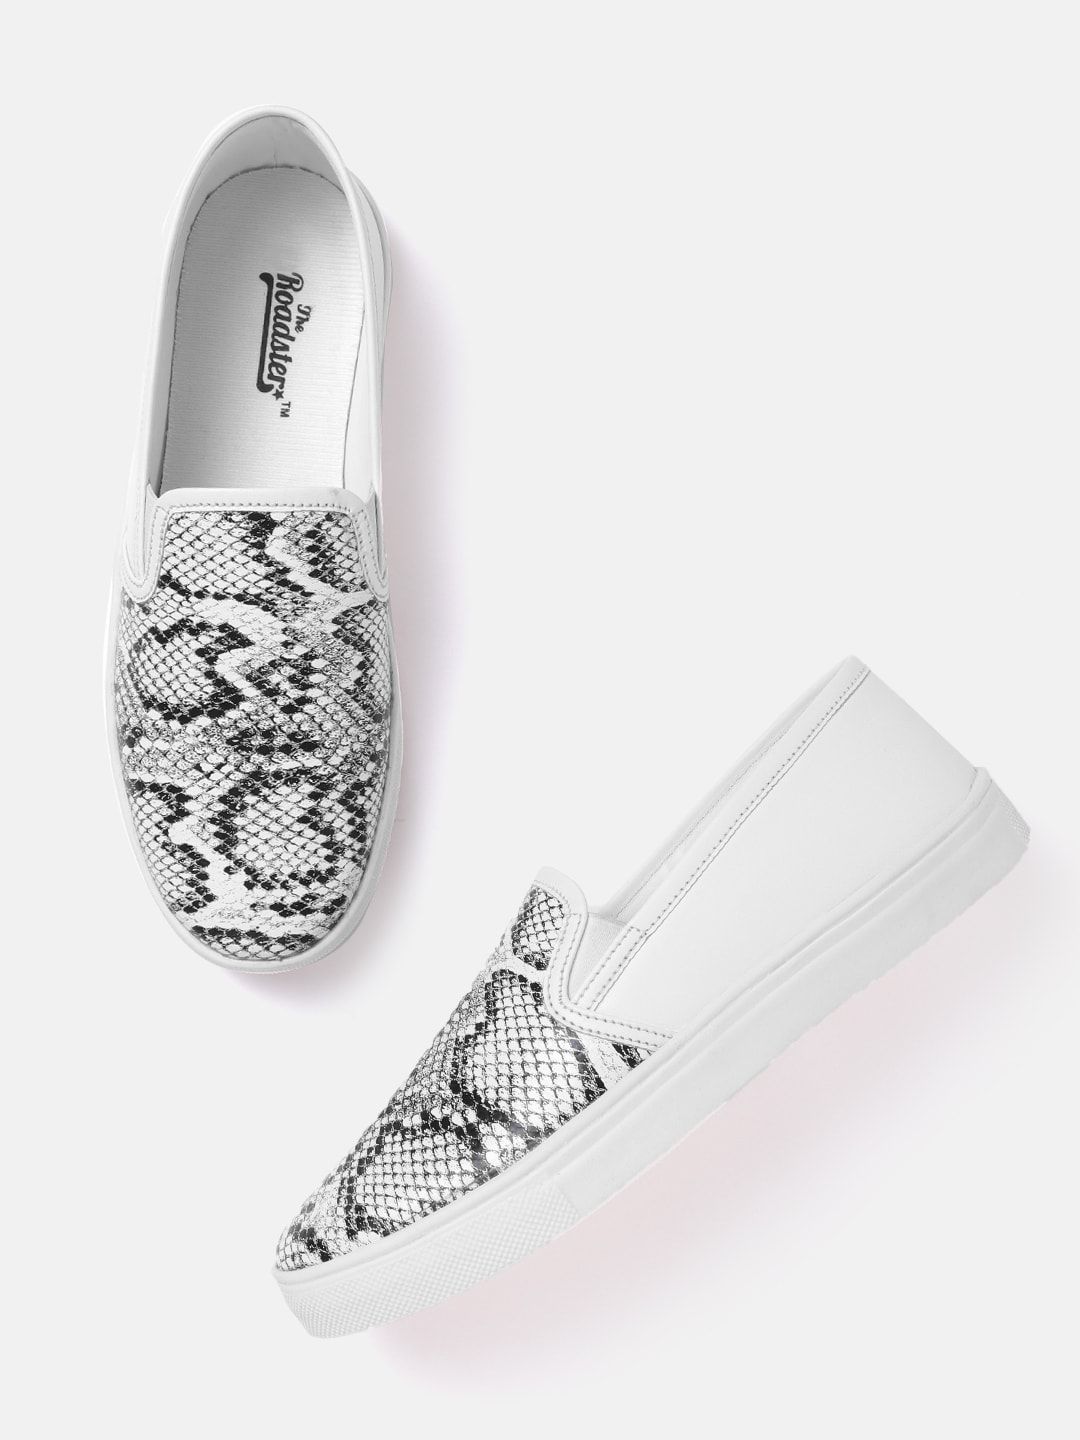 The Roadster Lifestyle Co Women White & Black Snakeskin Print Slip-On Sneakers Price in India